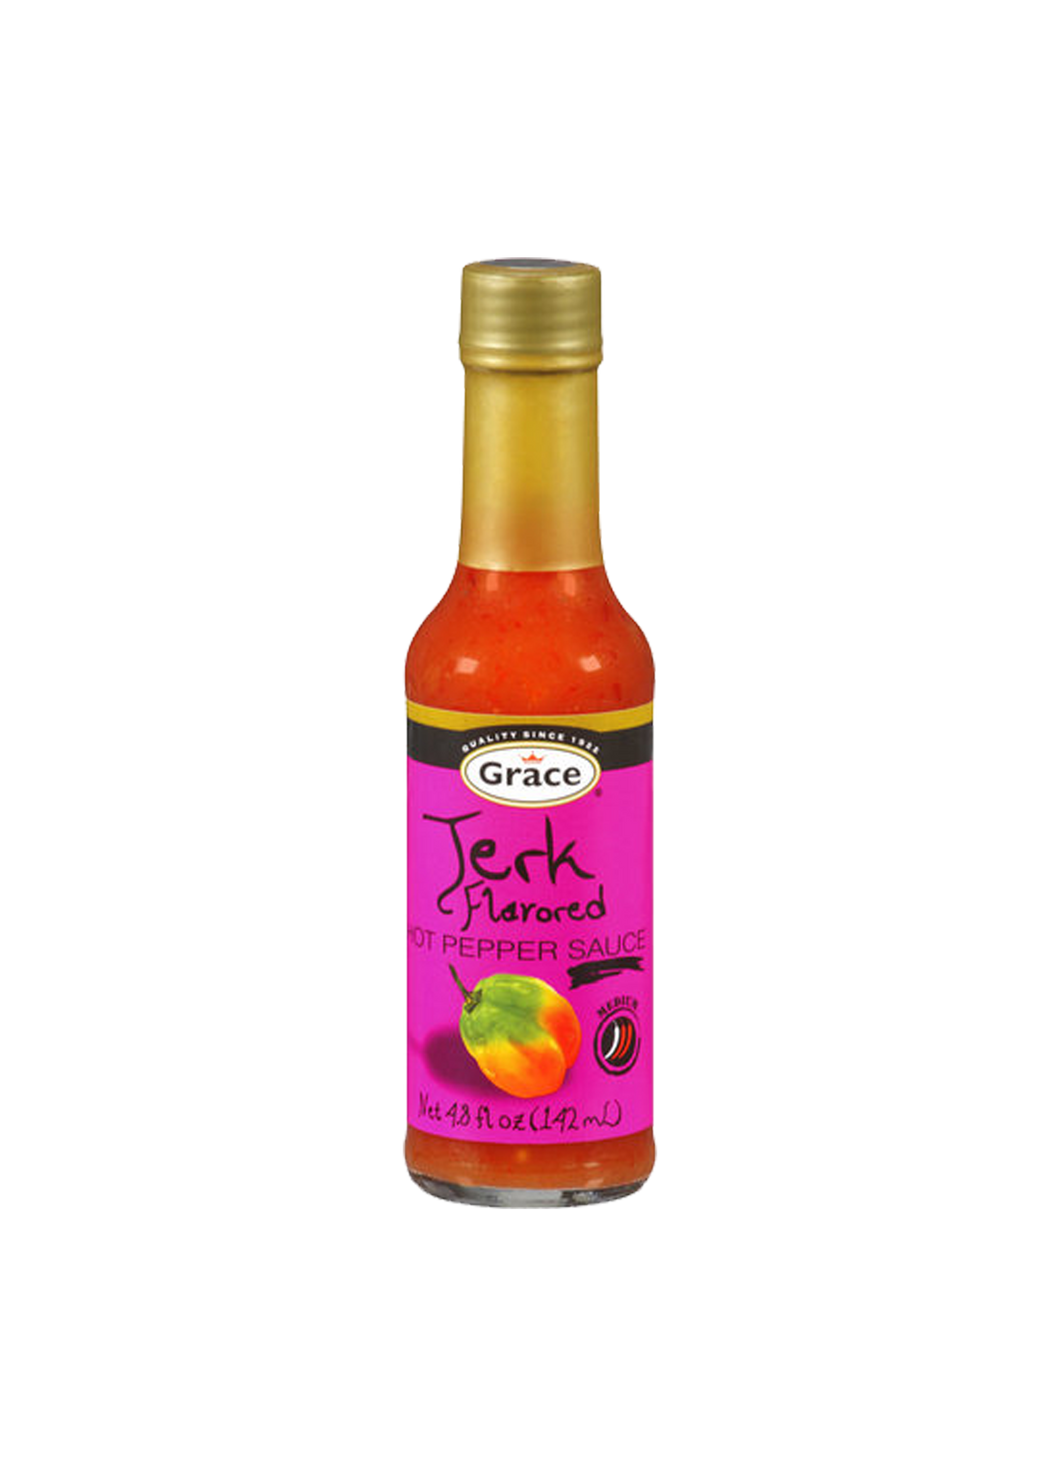 Grace Jerk Flavored Hot Pepper Sauce 142ml